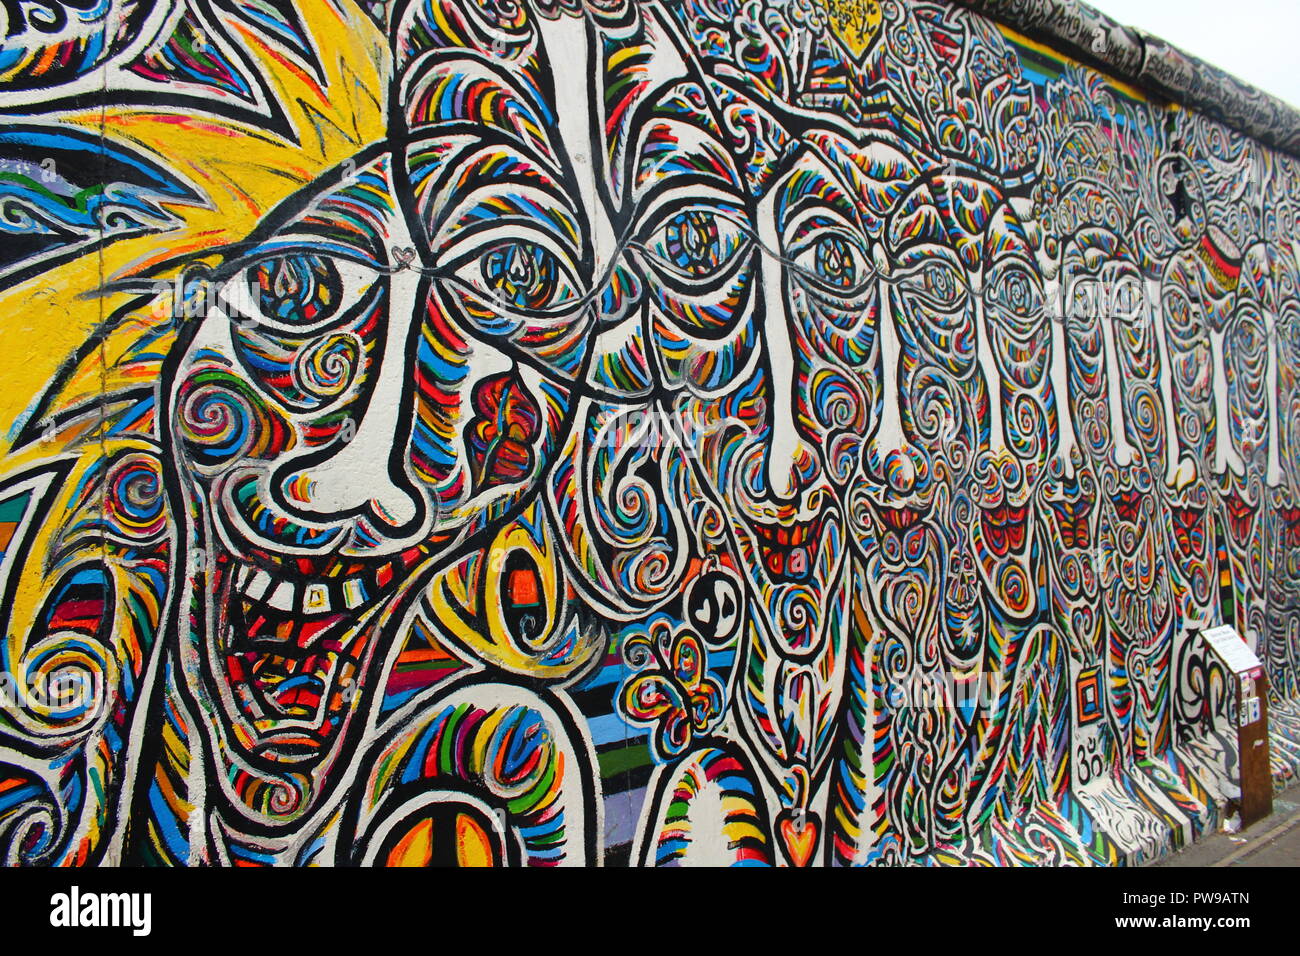 World's People, East Side Gallery, Berlin Wall Stock Photo - Alamy